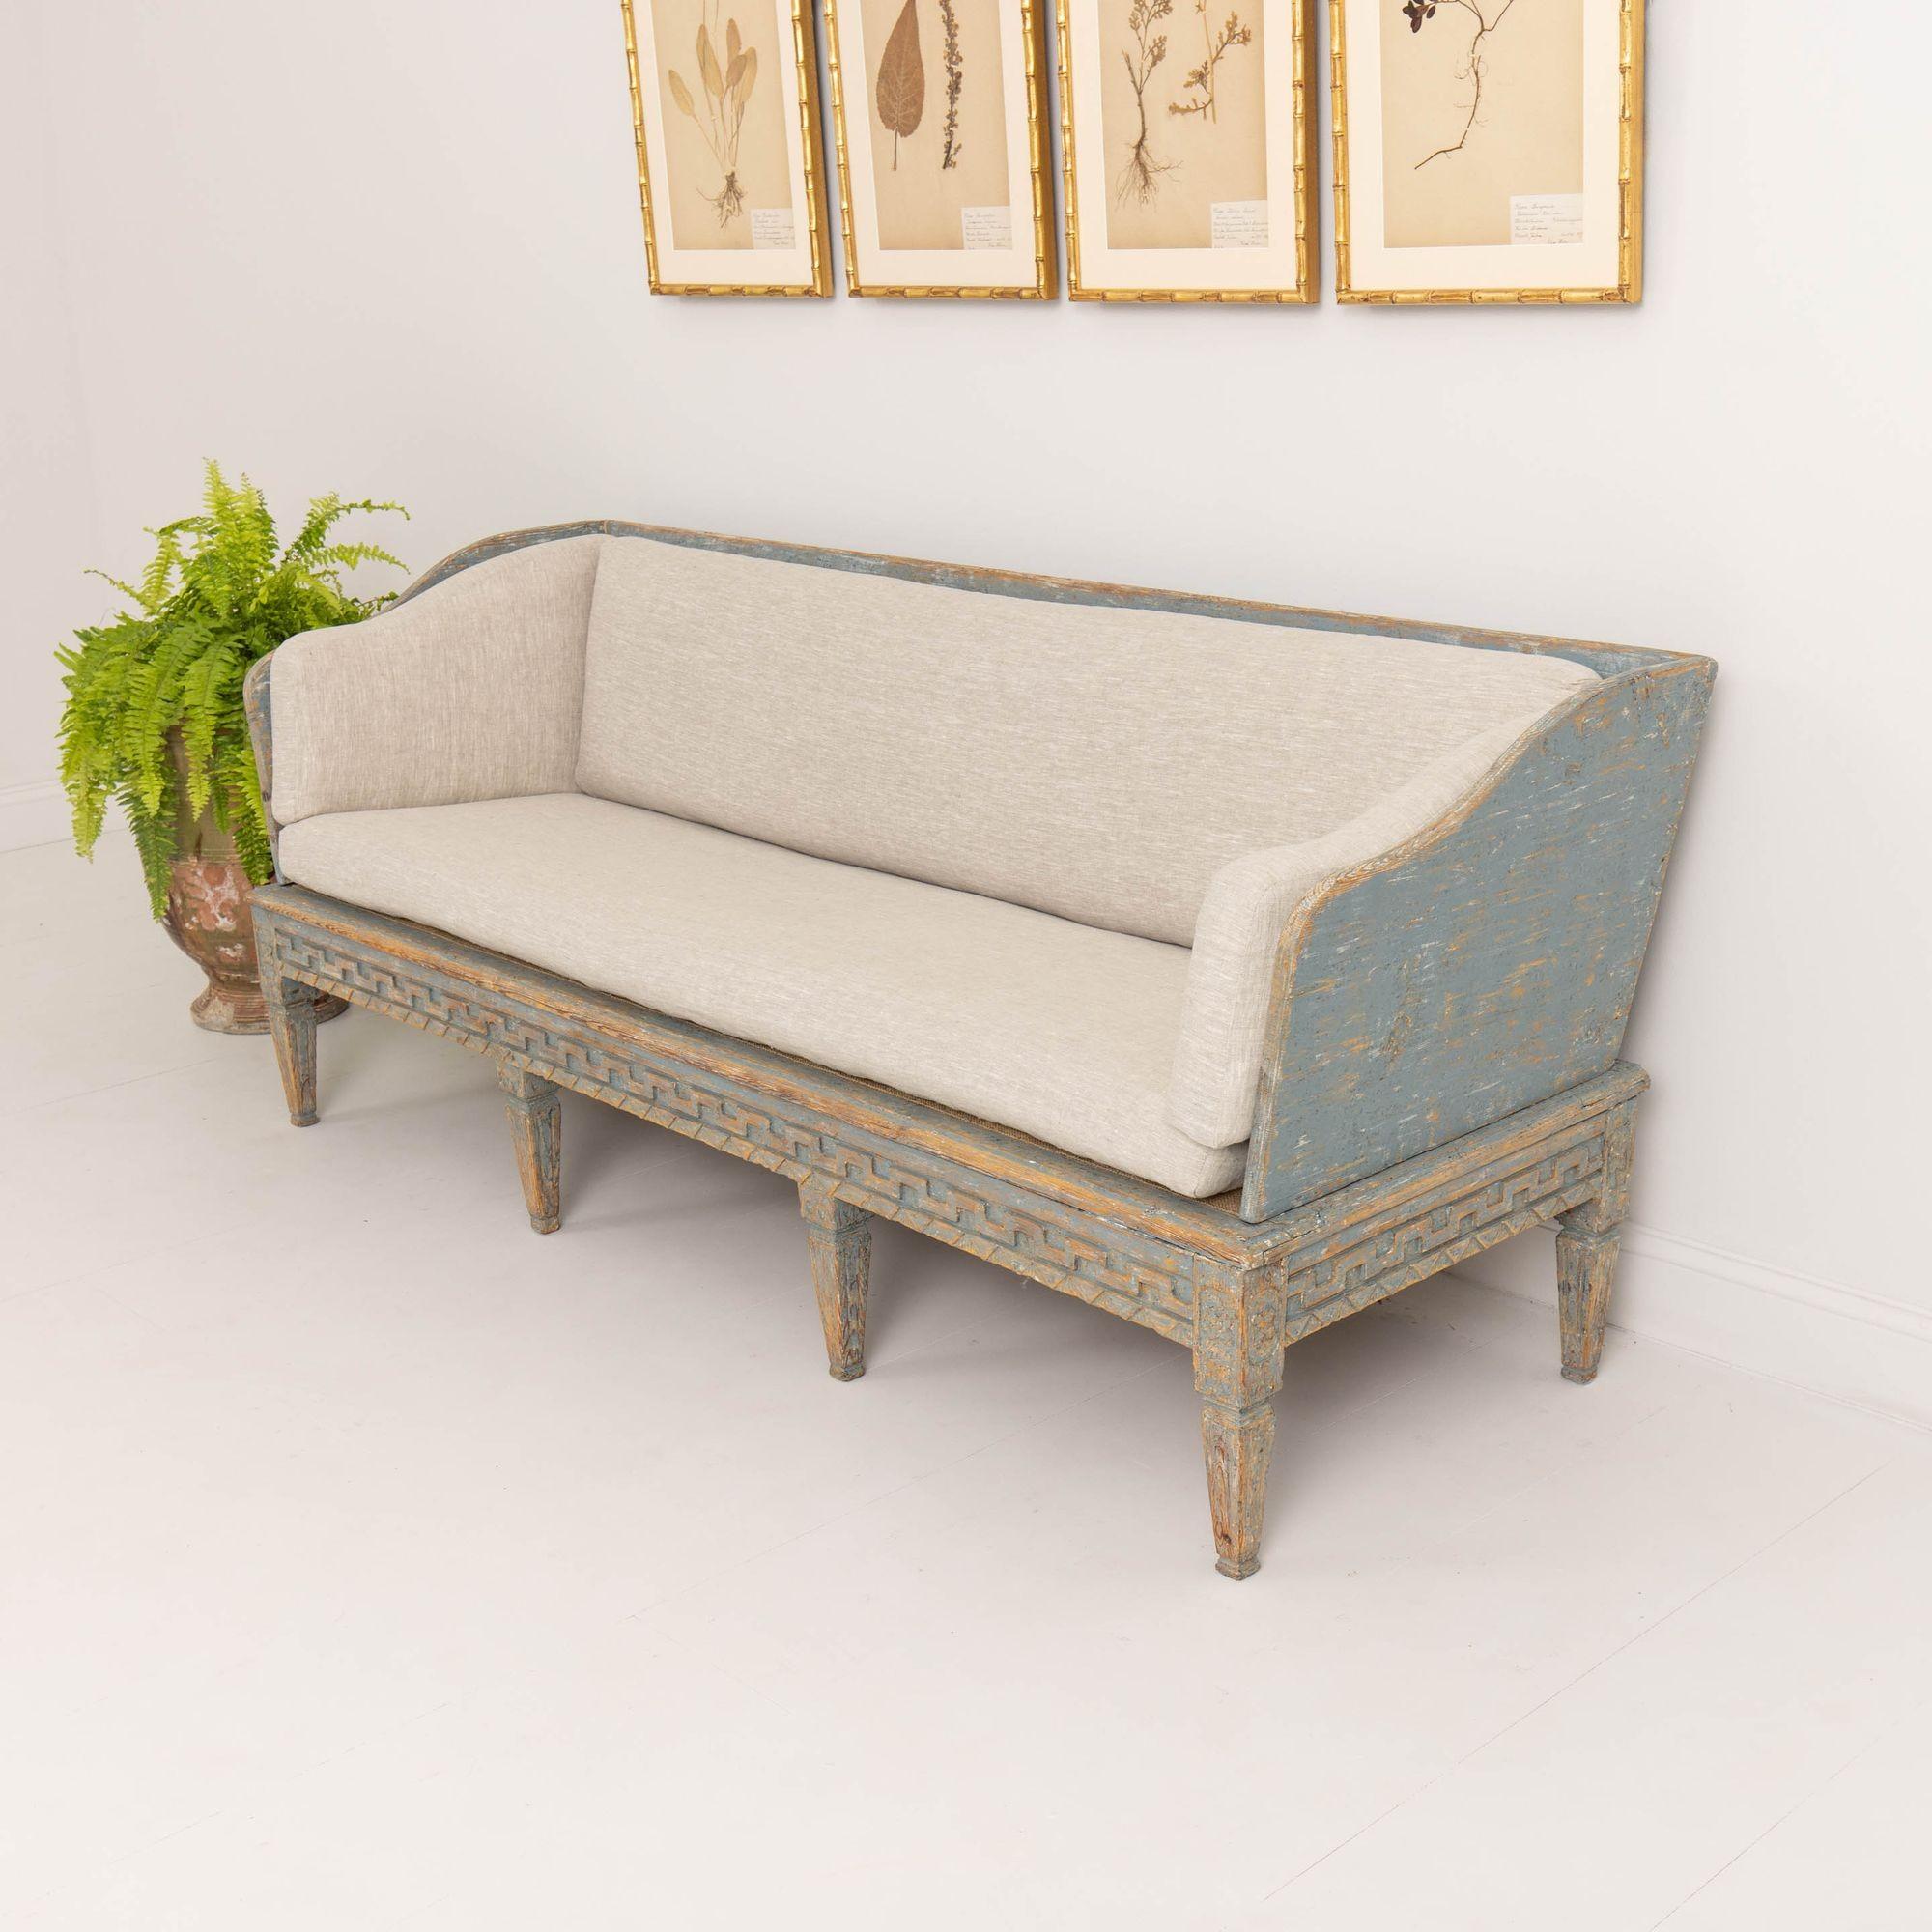 18th c. Swedish Gustavian Period Painted Sofa 'Trägsoffa' For Sale 5